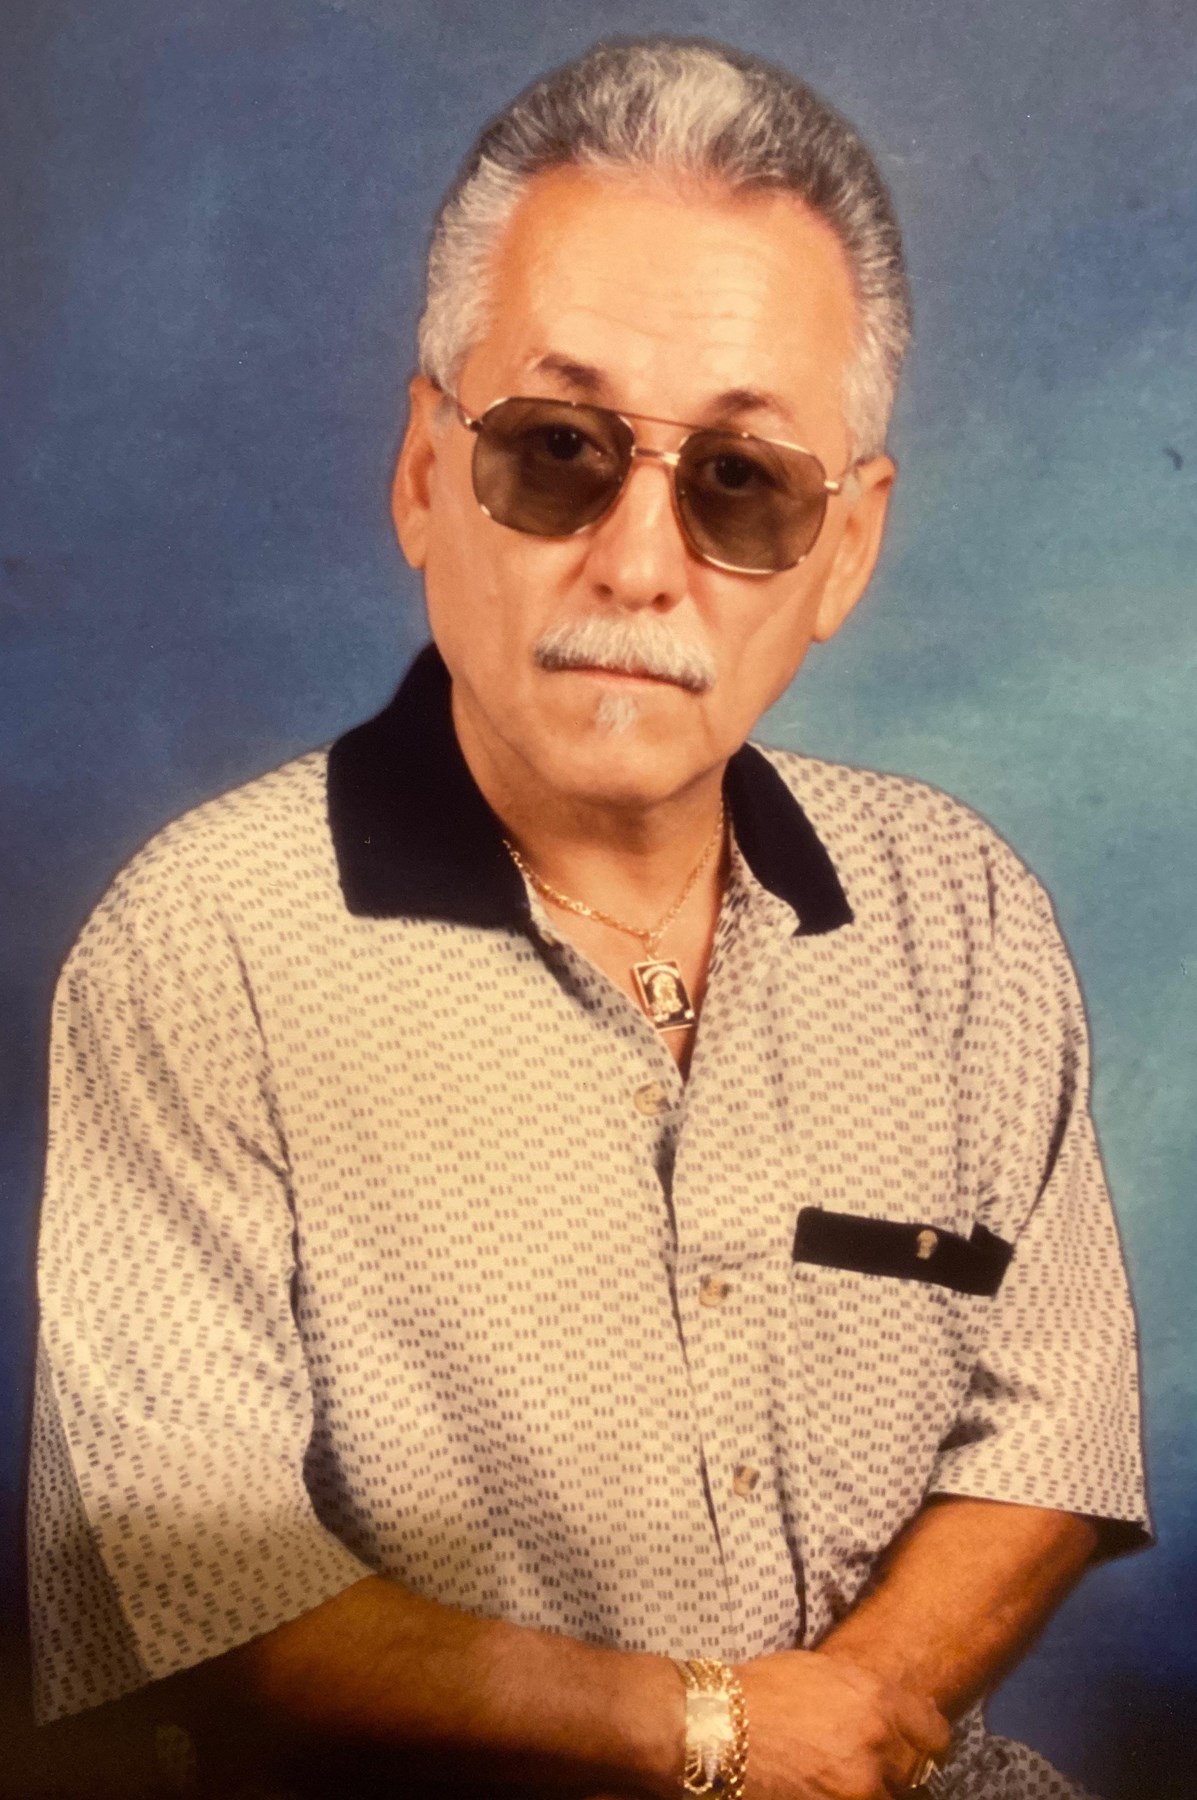 Obituary of Salvador Antonio Caballero - 08/01/2020 - From the Family